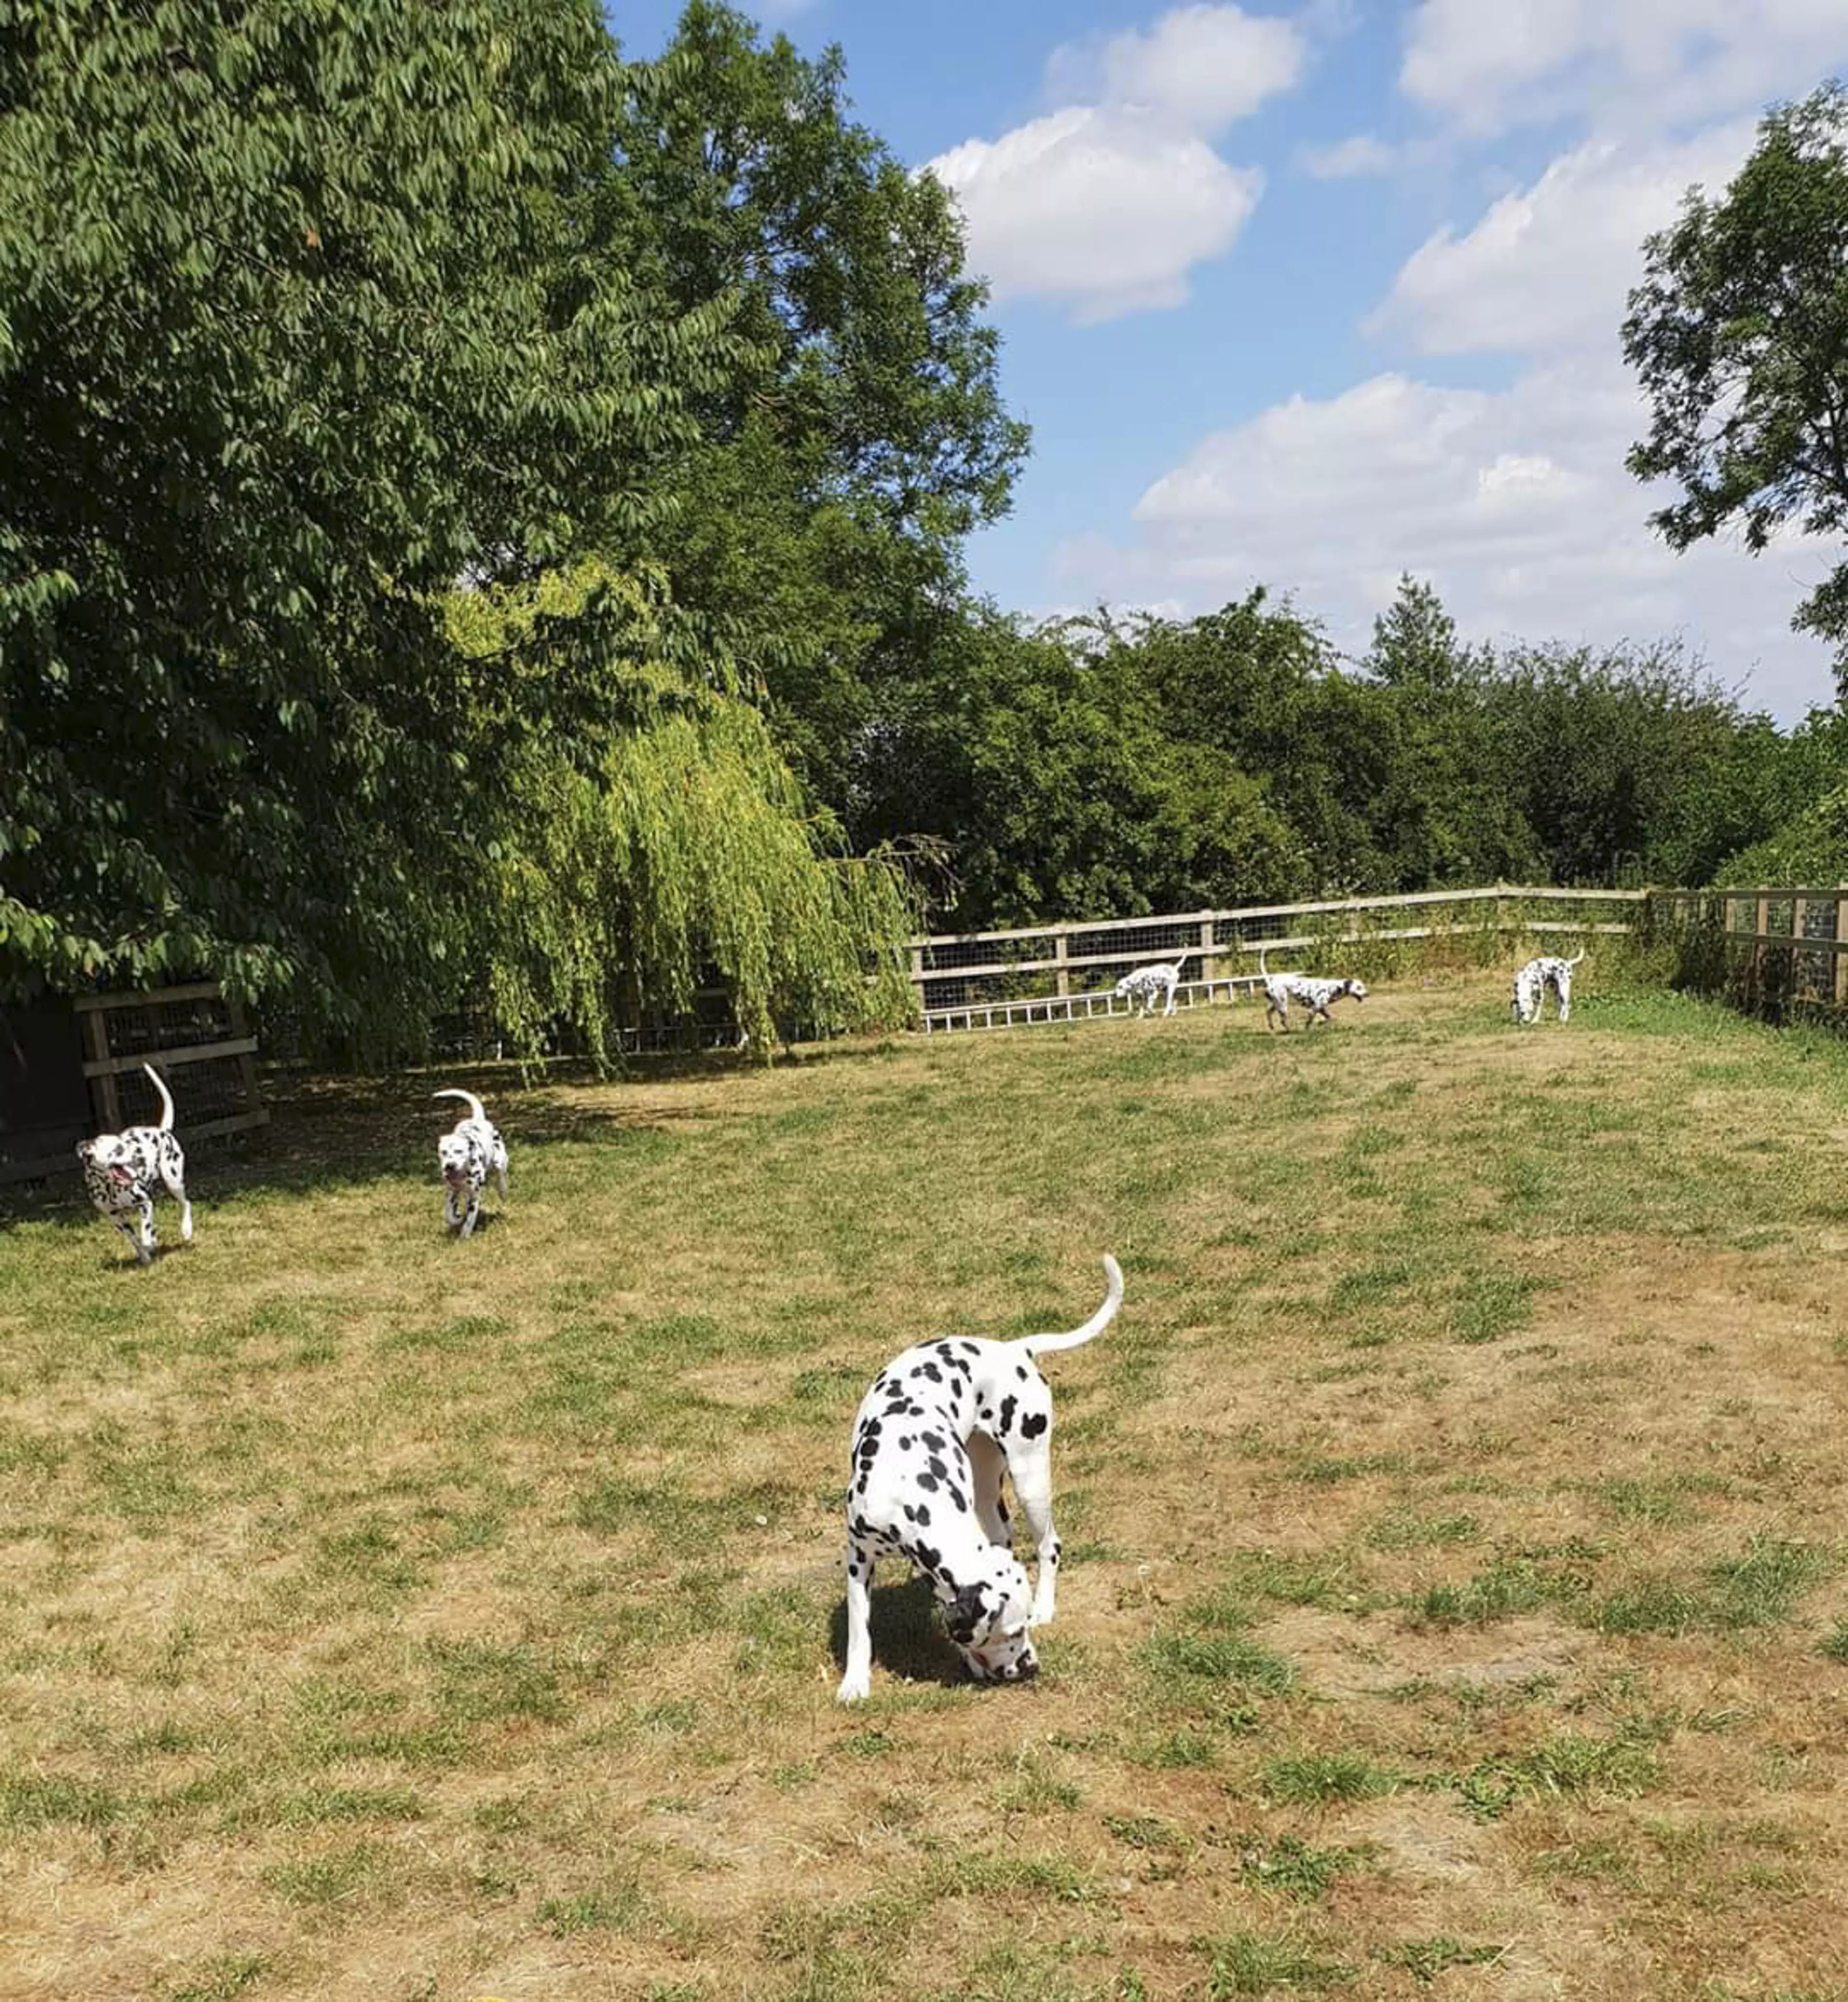 Louise already had nine Dalmatians, which roam her home in Preston, Lancs (